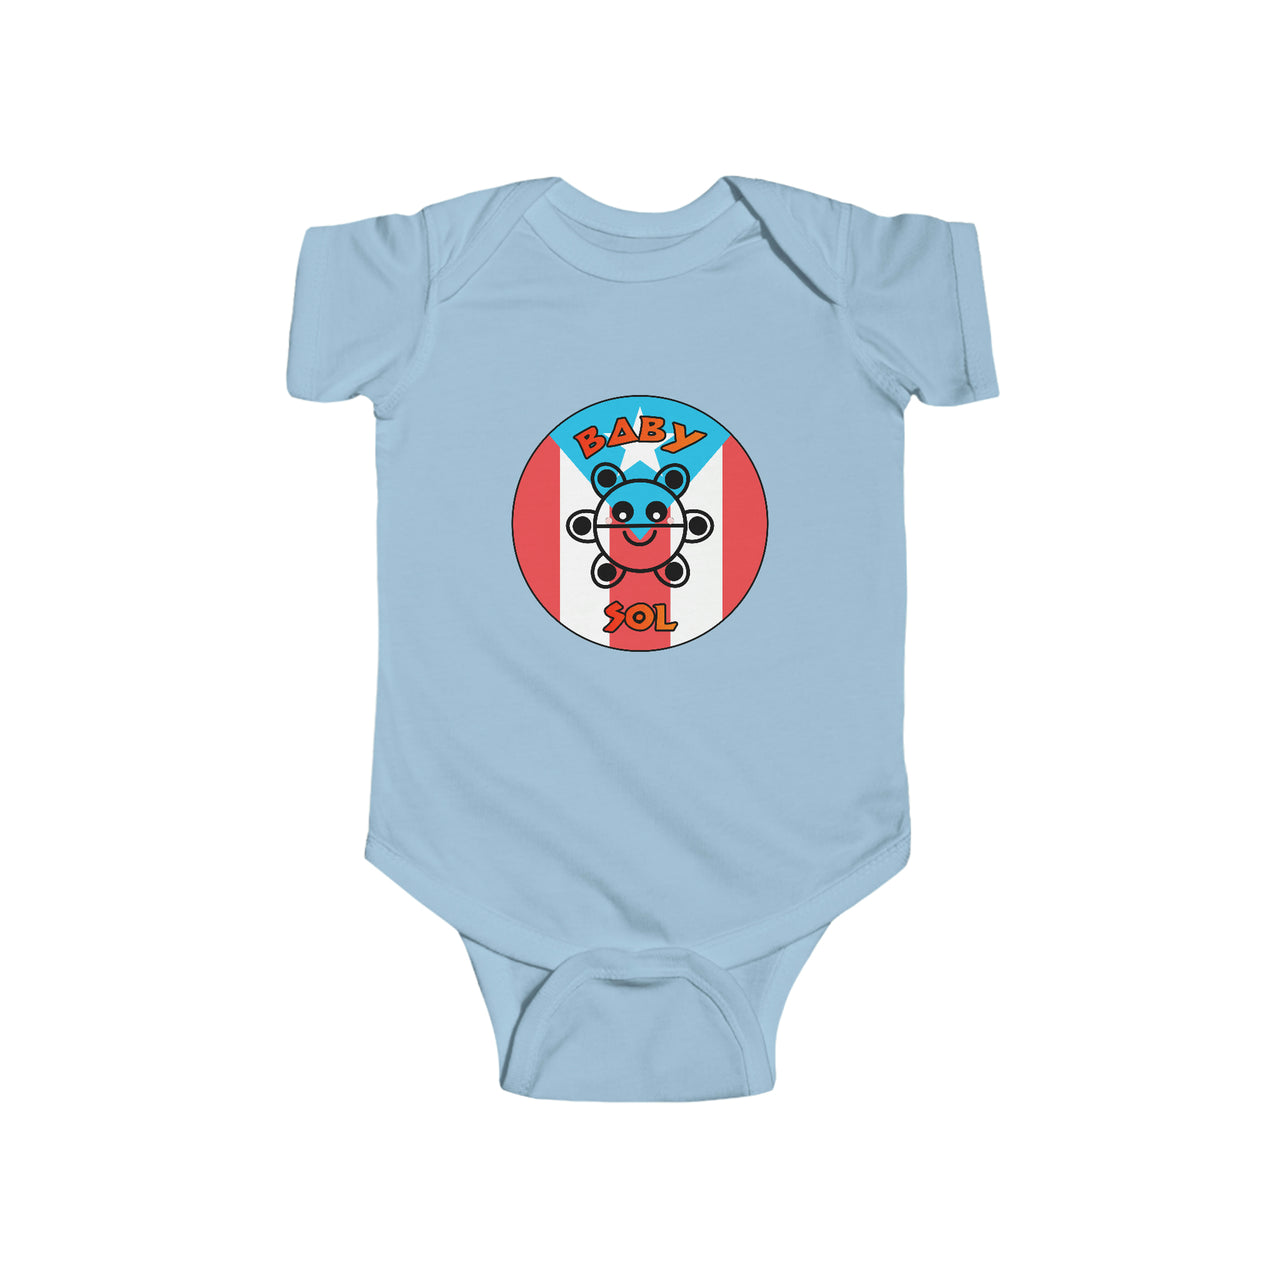 Baby Sol - Infant Fine Jersey Bodysuit